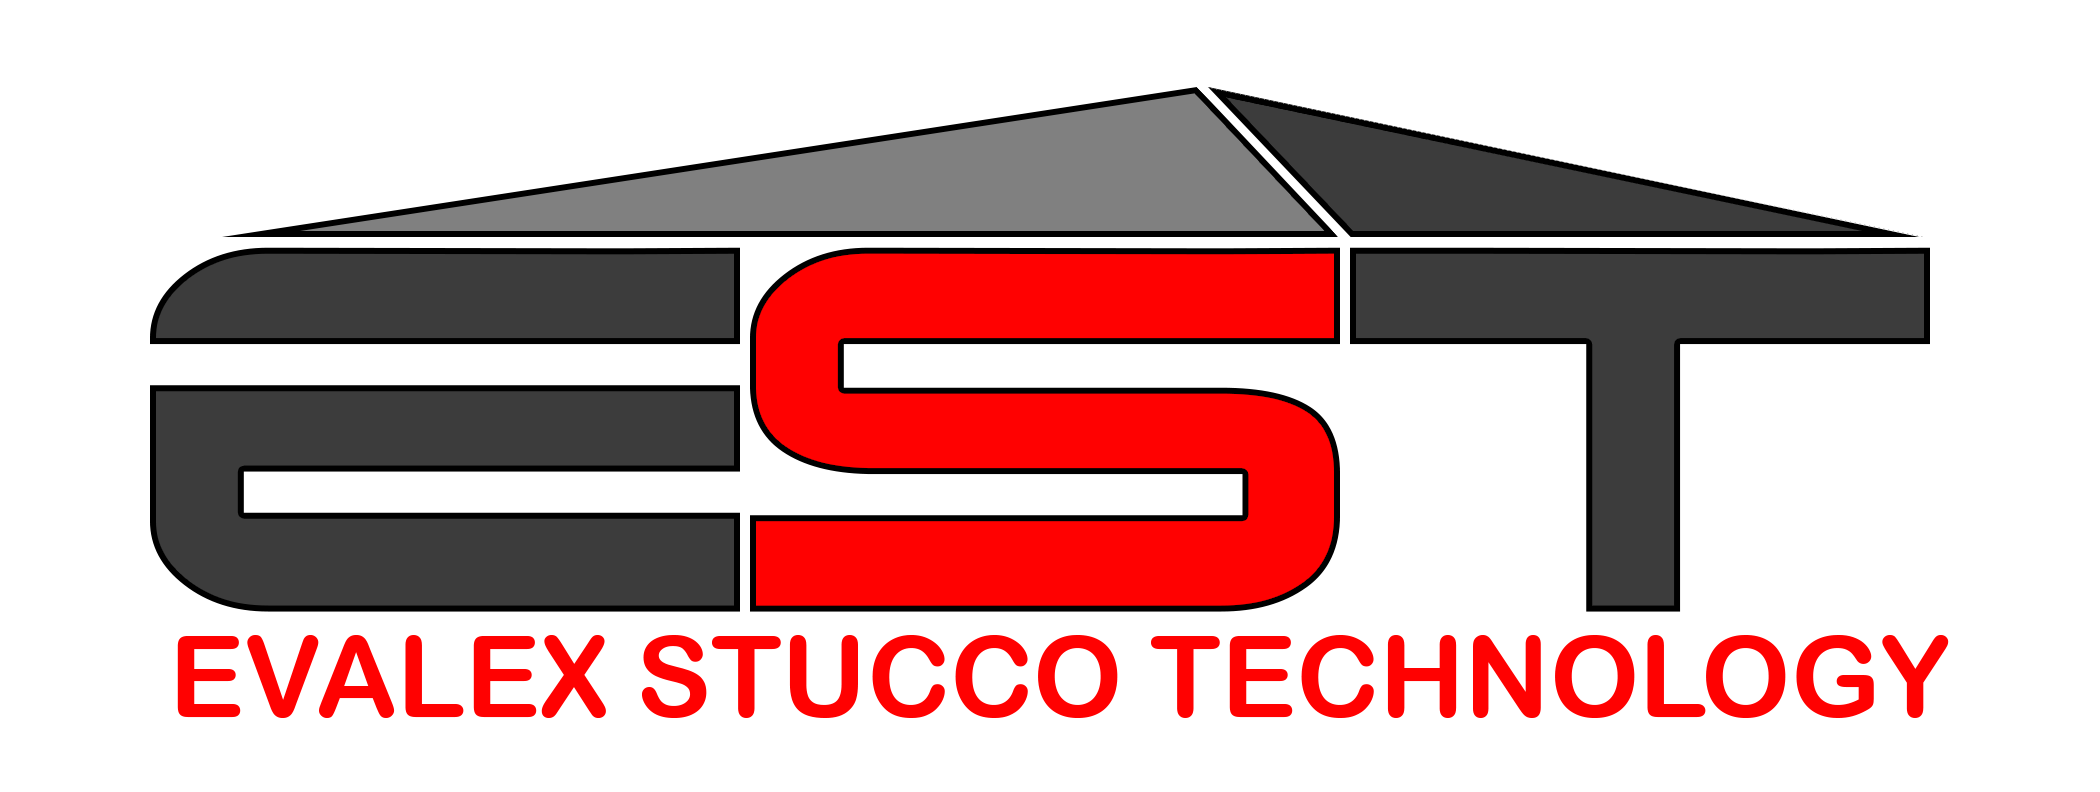 Evalex Stucco Technology